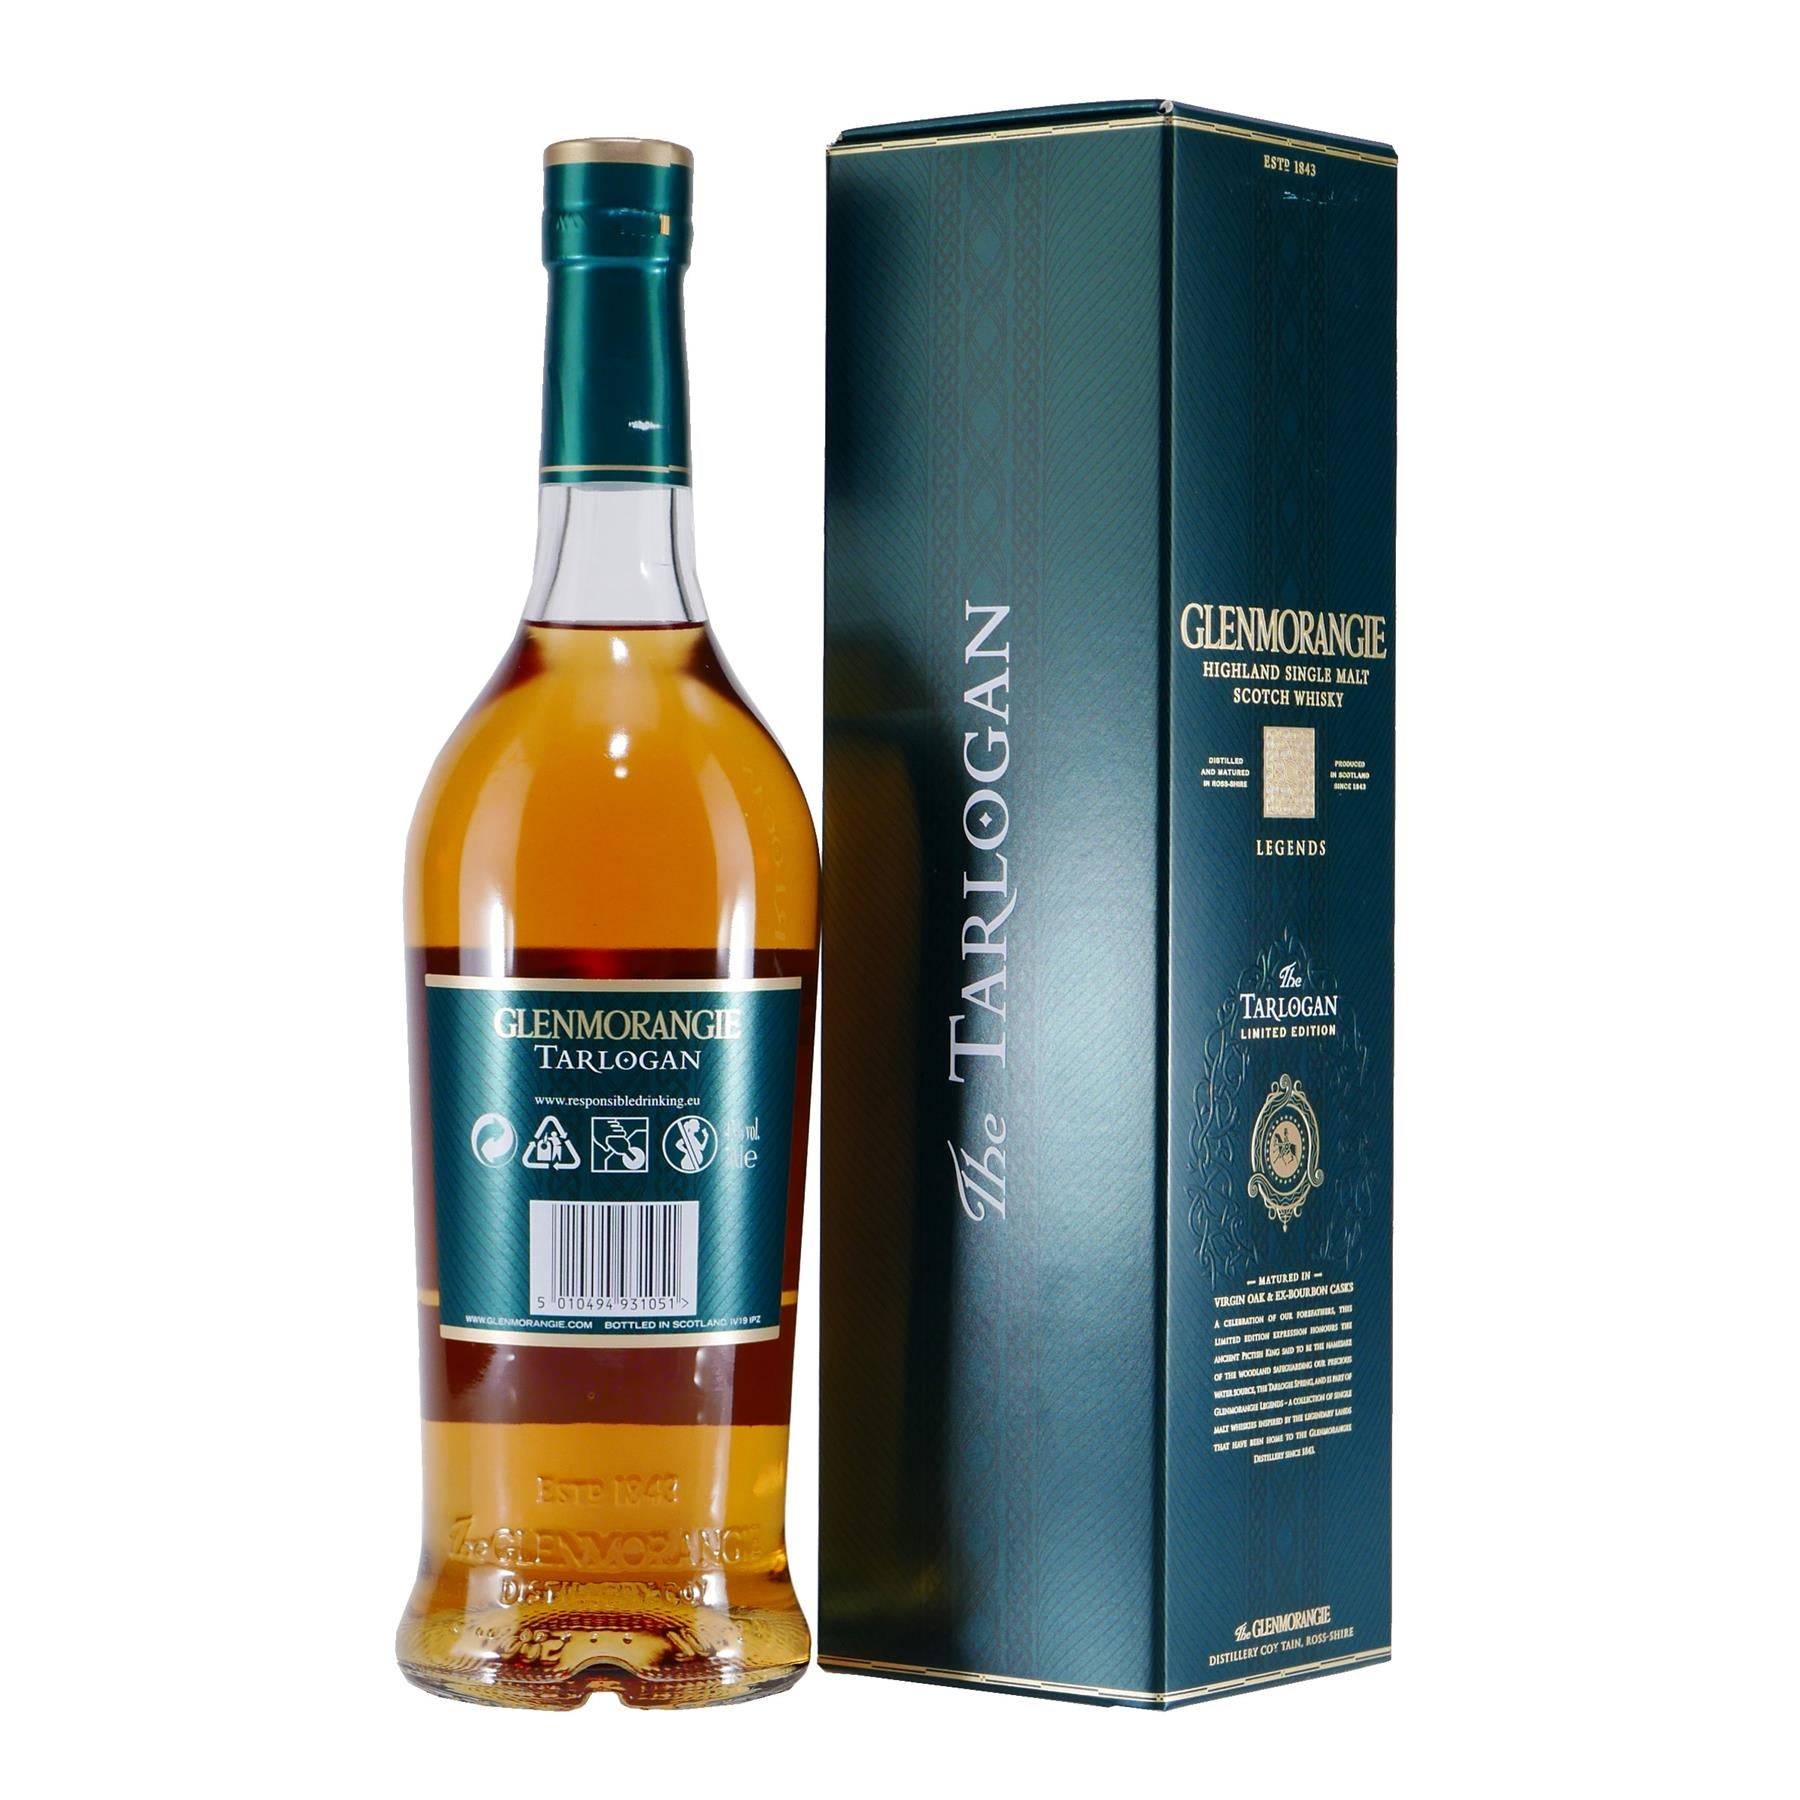 Glenmorangie Single Malt Whisky Tarlogan Limited Edition